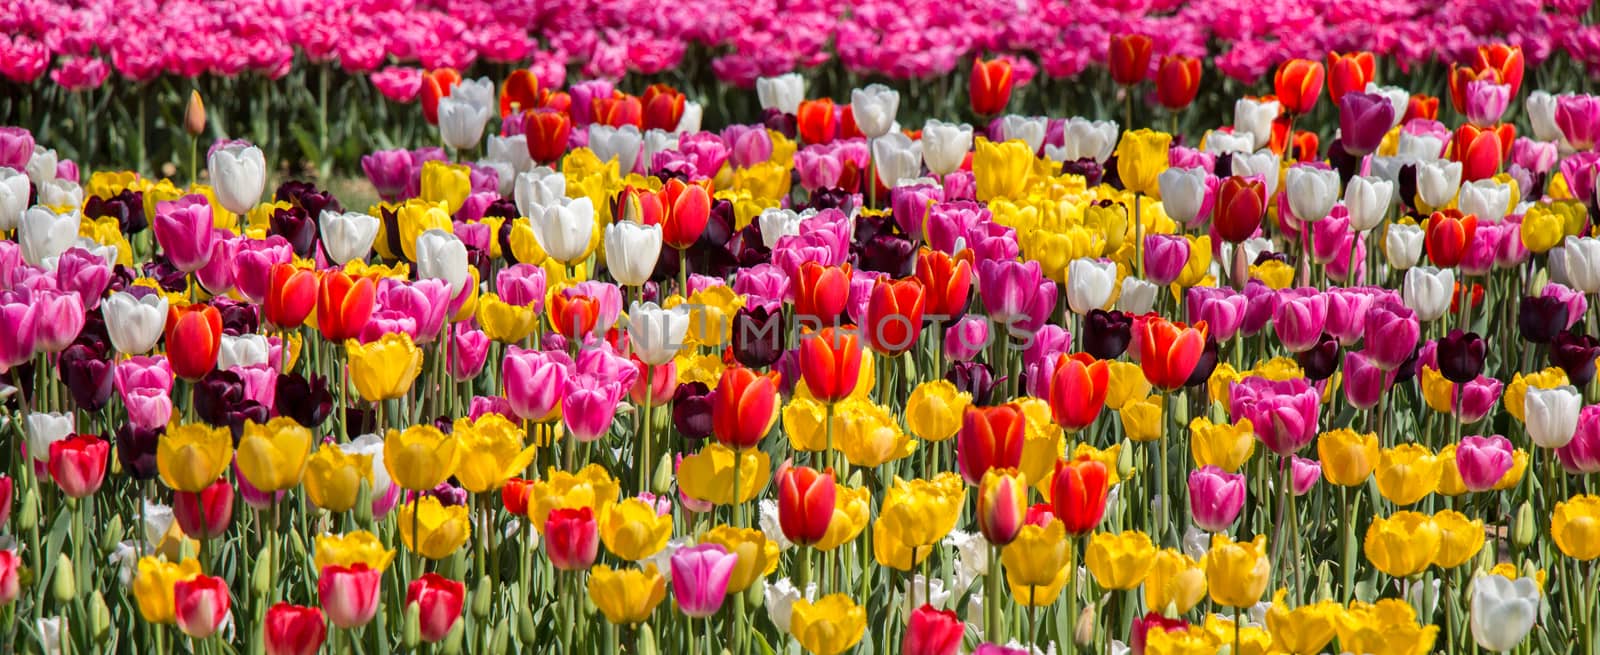 Various color tulip flowers in the garden by berkay